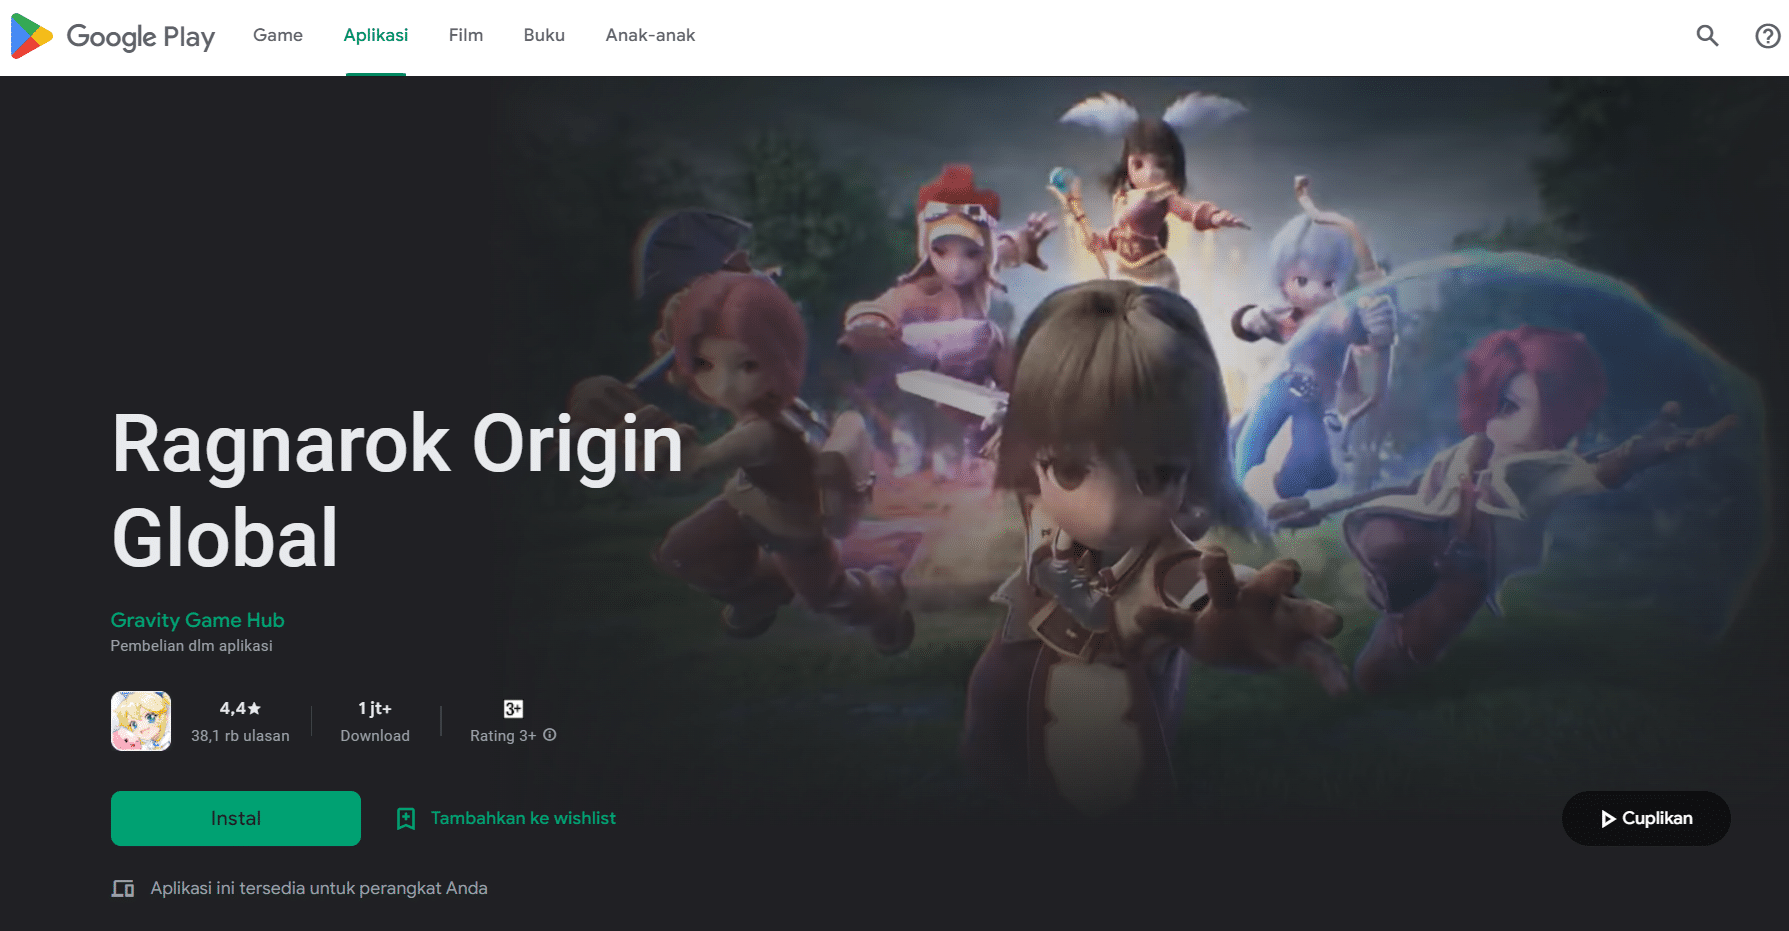 Ragnarok Origin グローバル - Android |出典: Google Play ストア